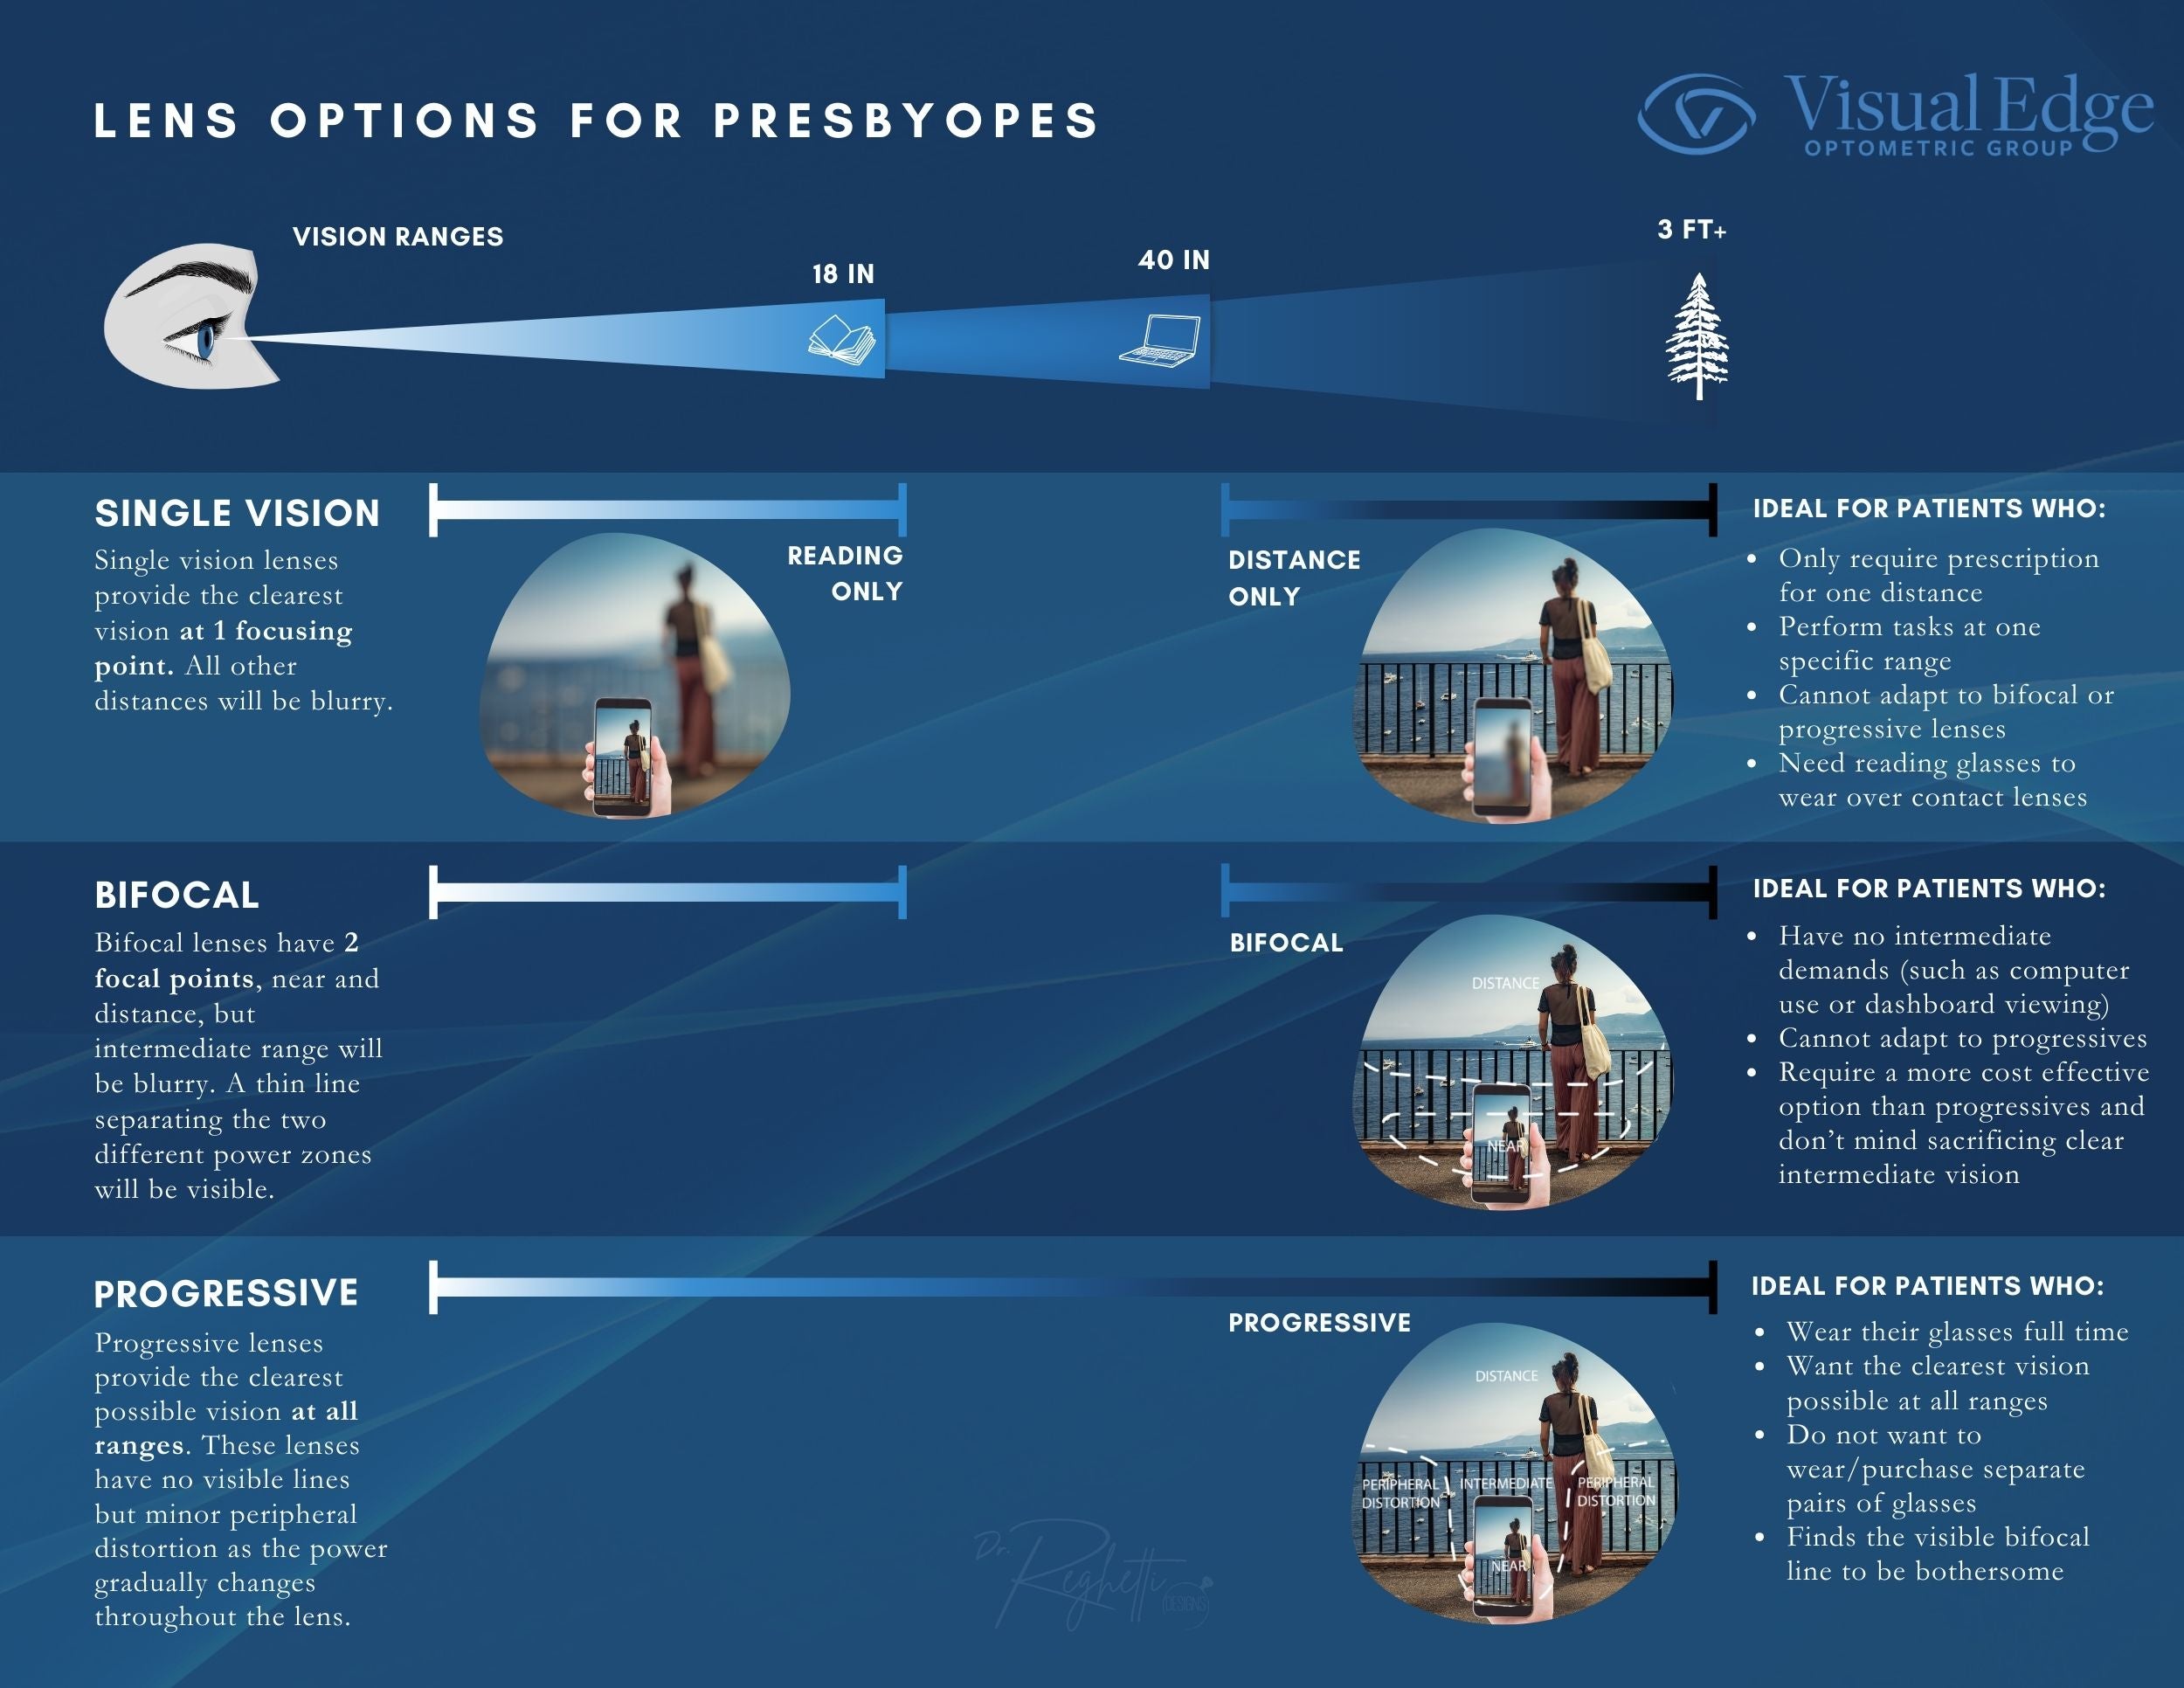 VEOG_Lens_Options_for_Presbyopes